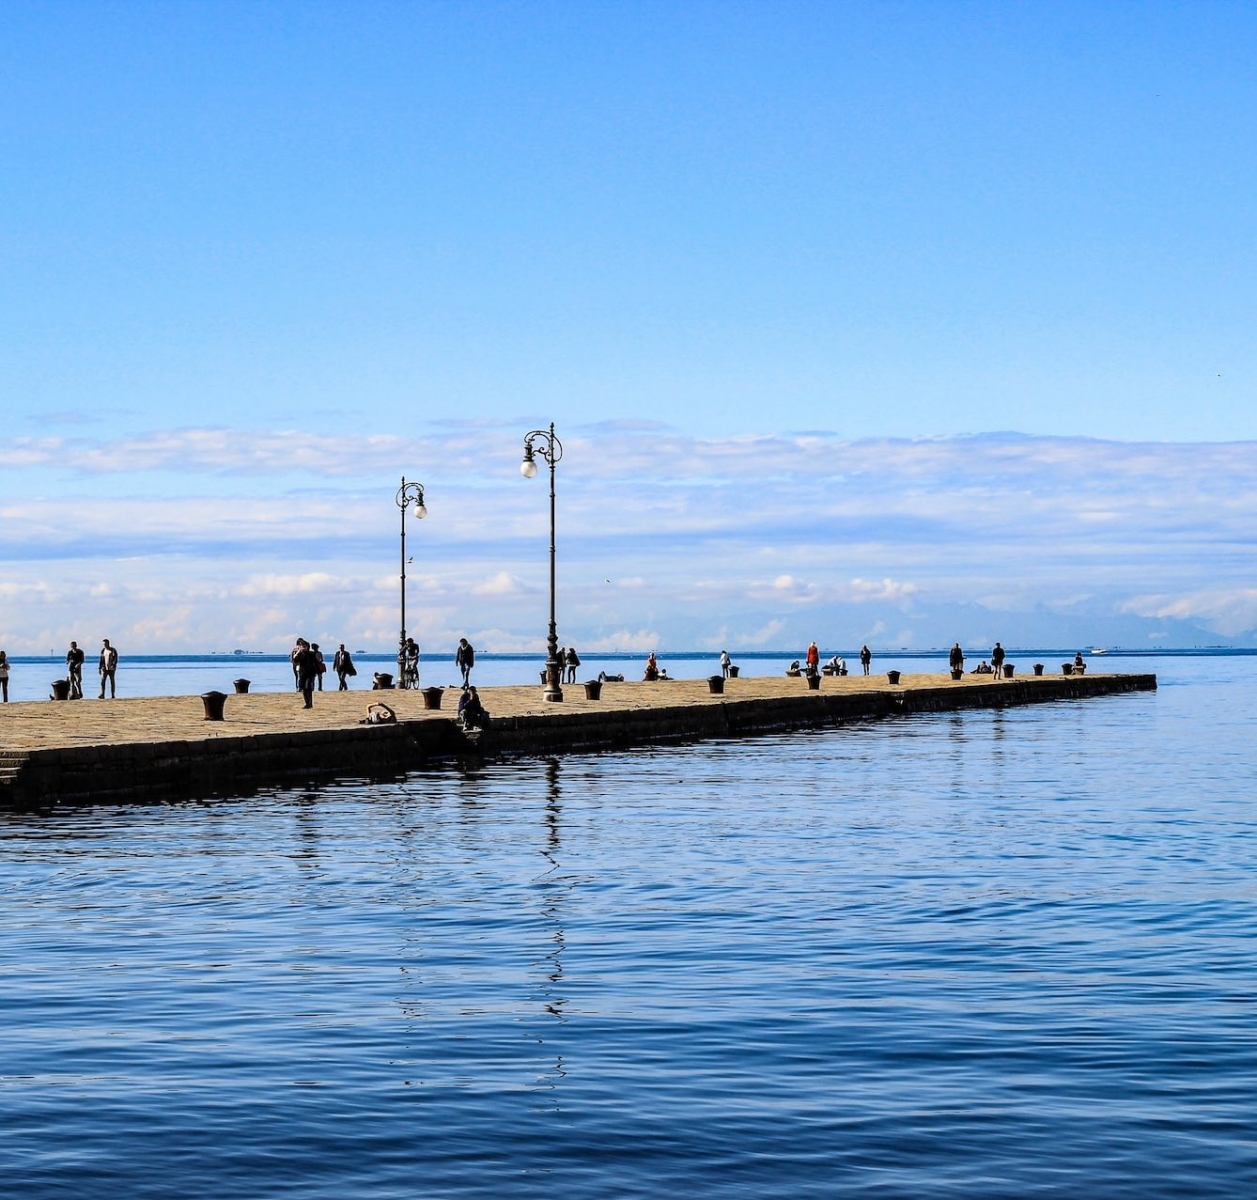 Molo Audace in Trieste